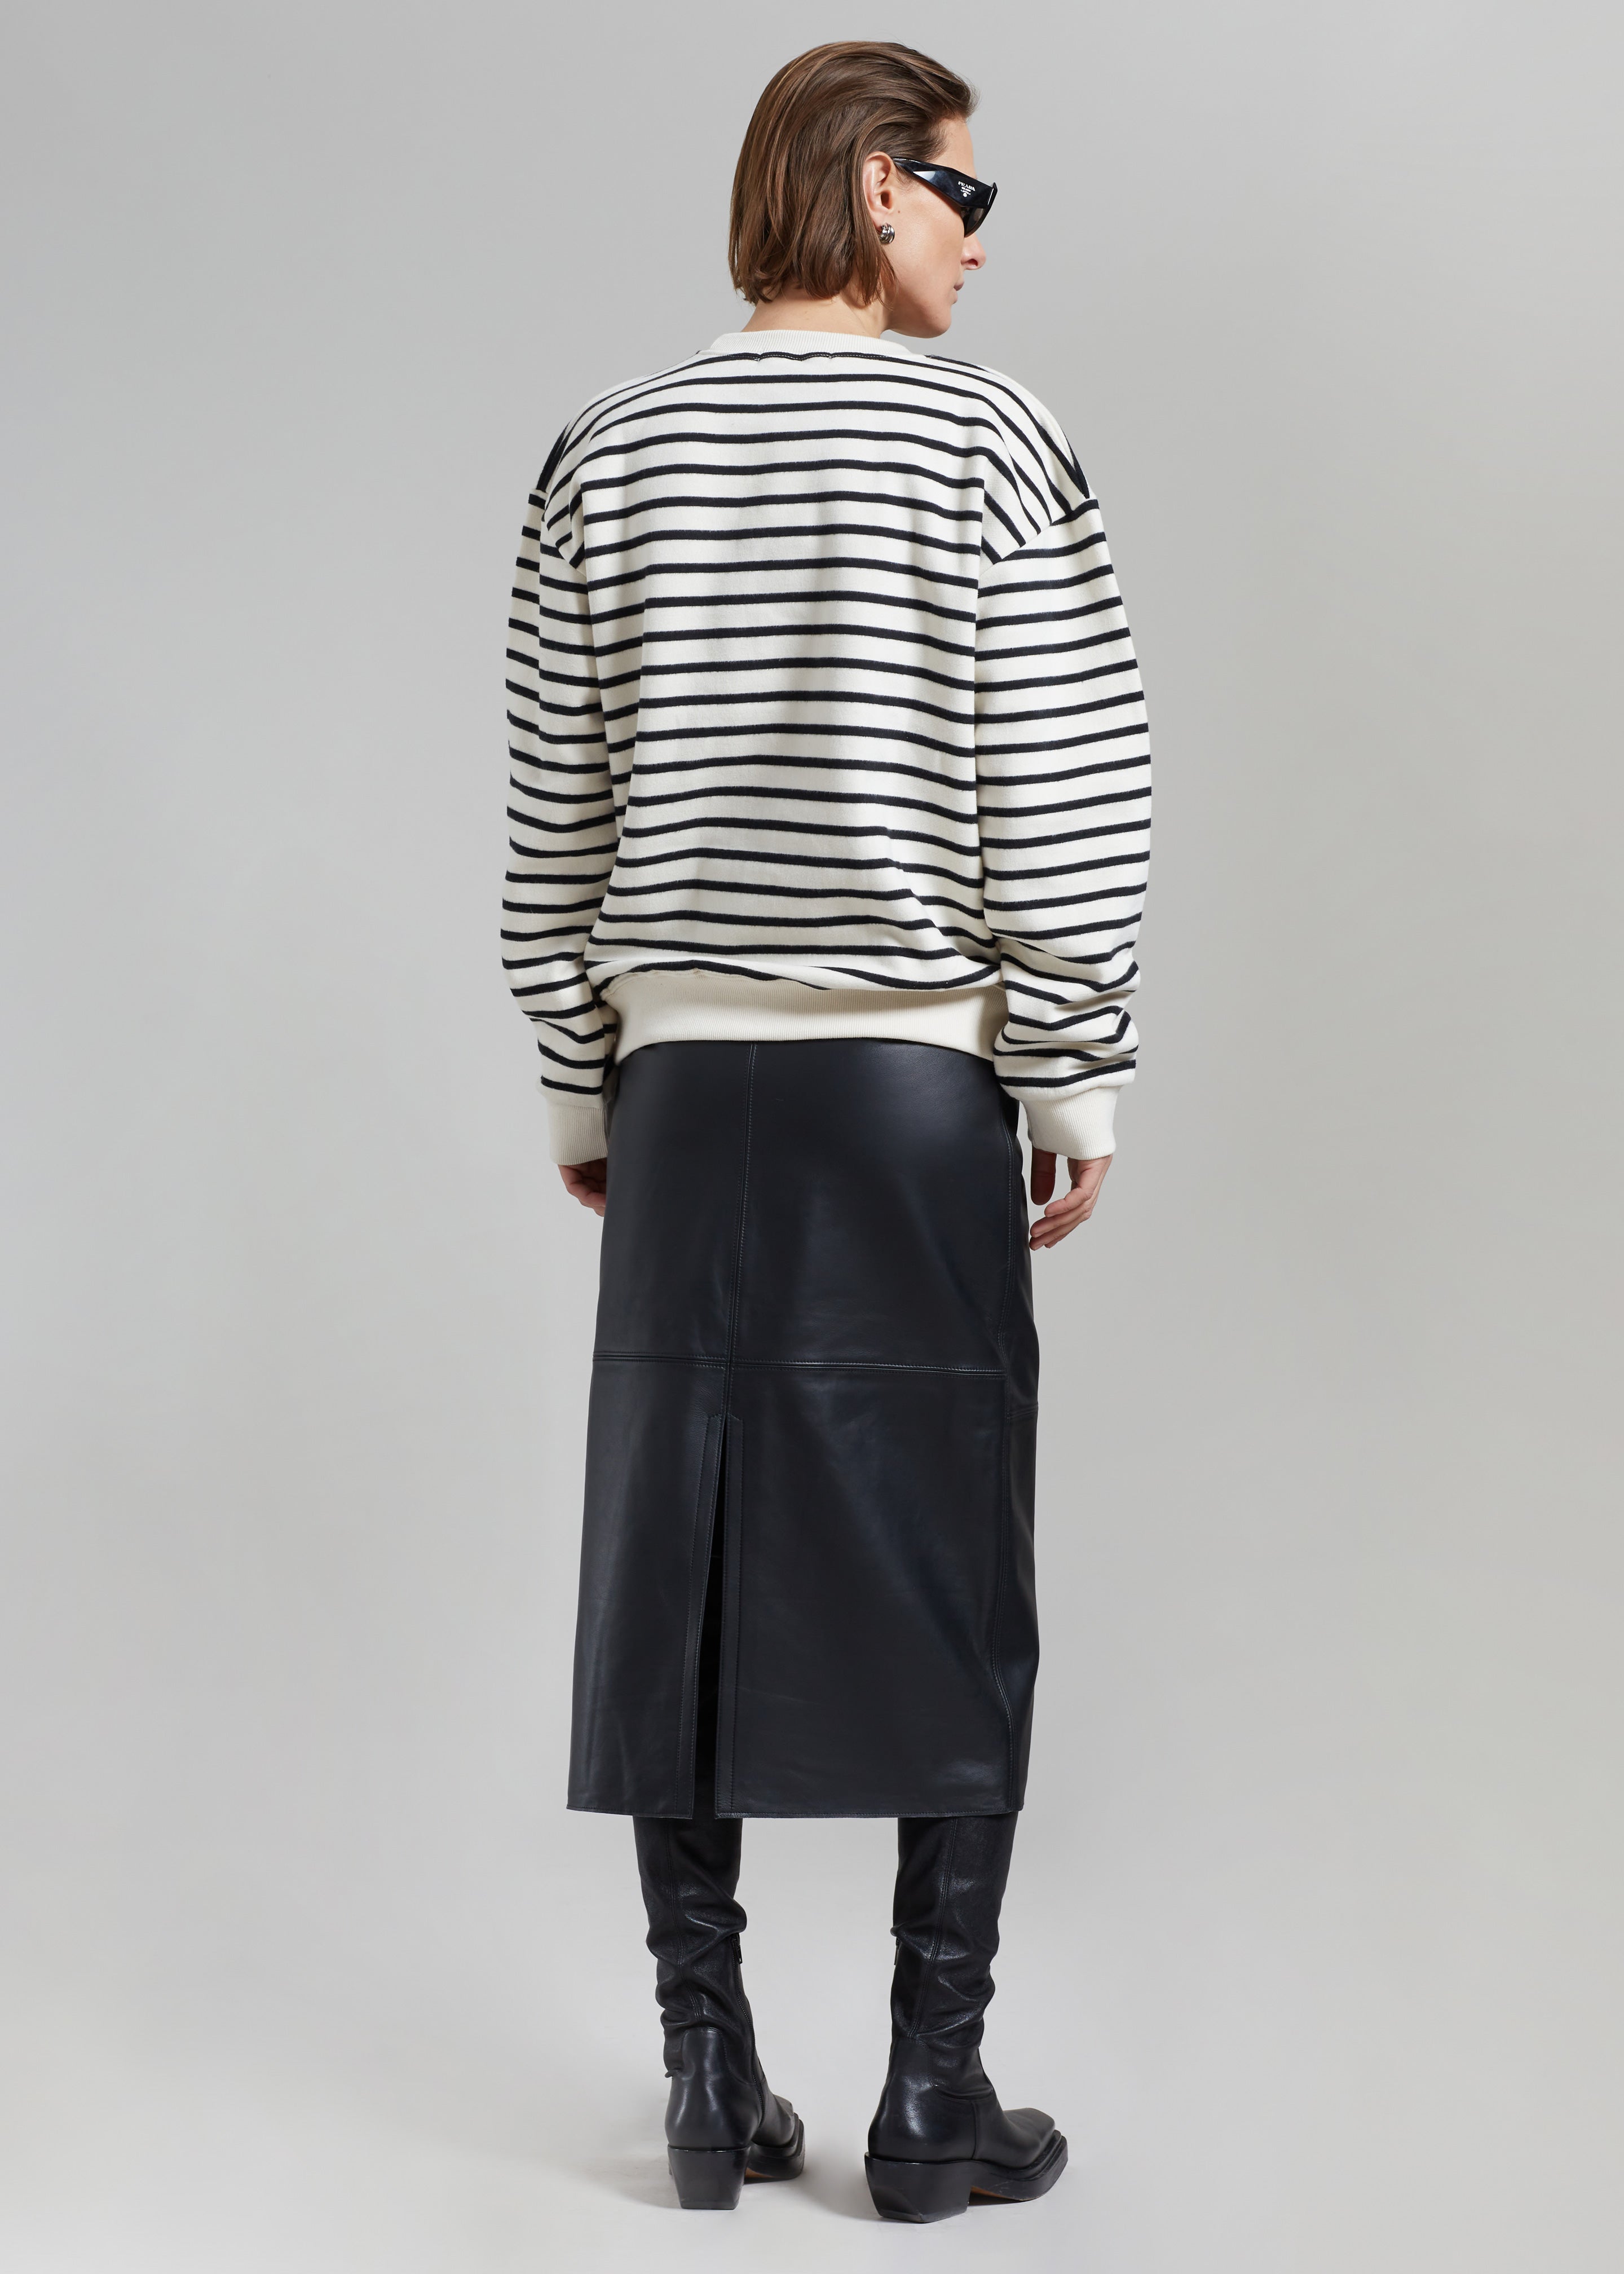 Saint Stripe Sweater - Black/White Stripe - 7